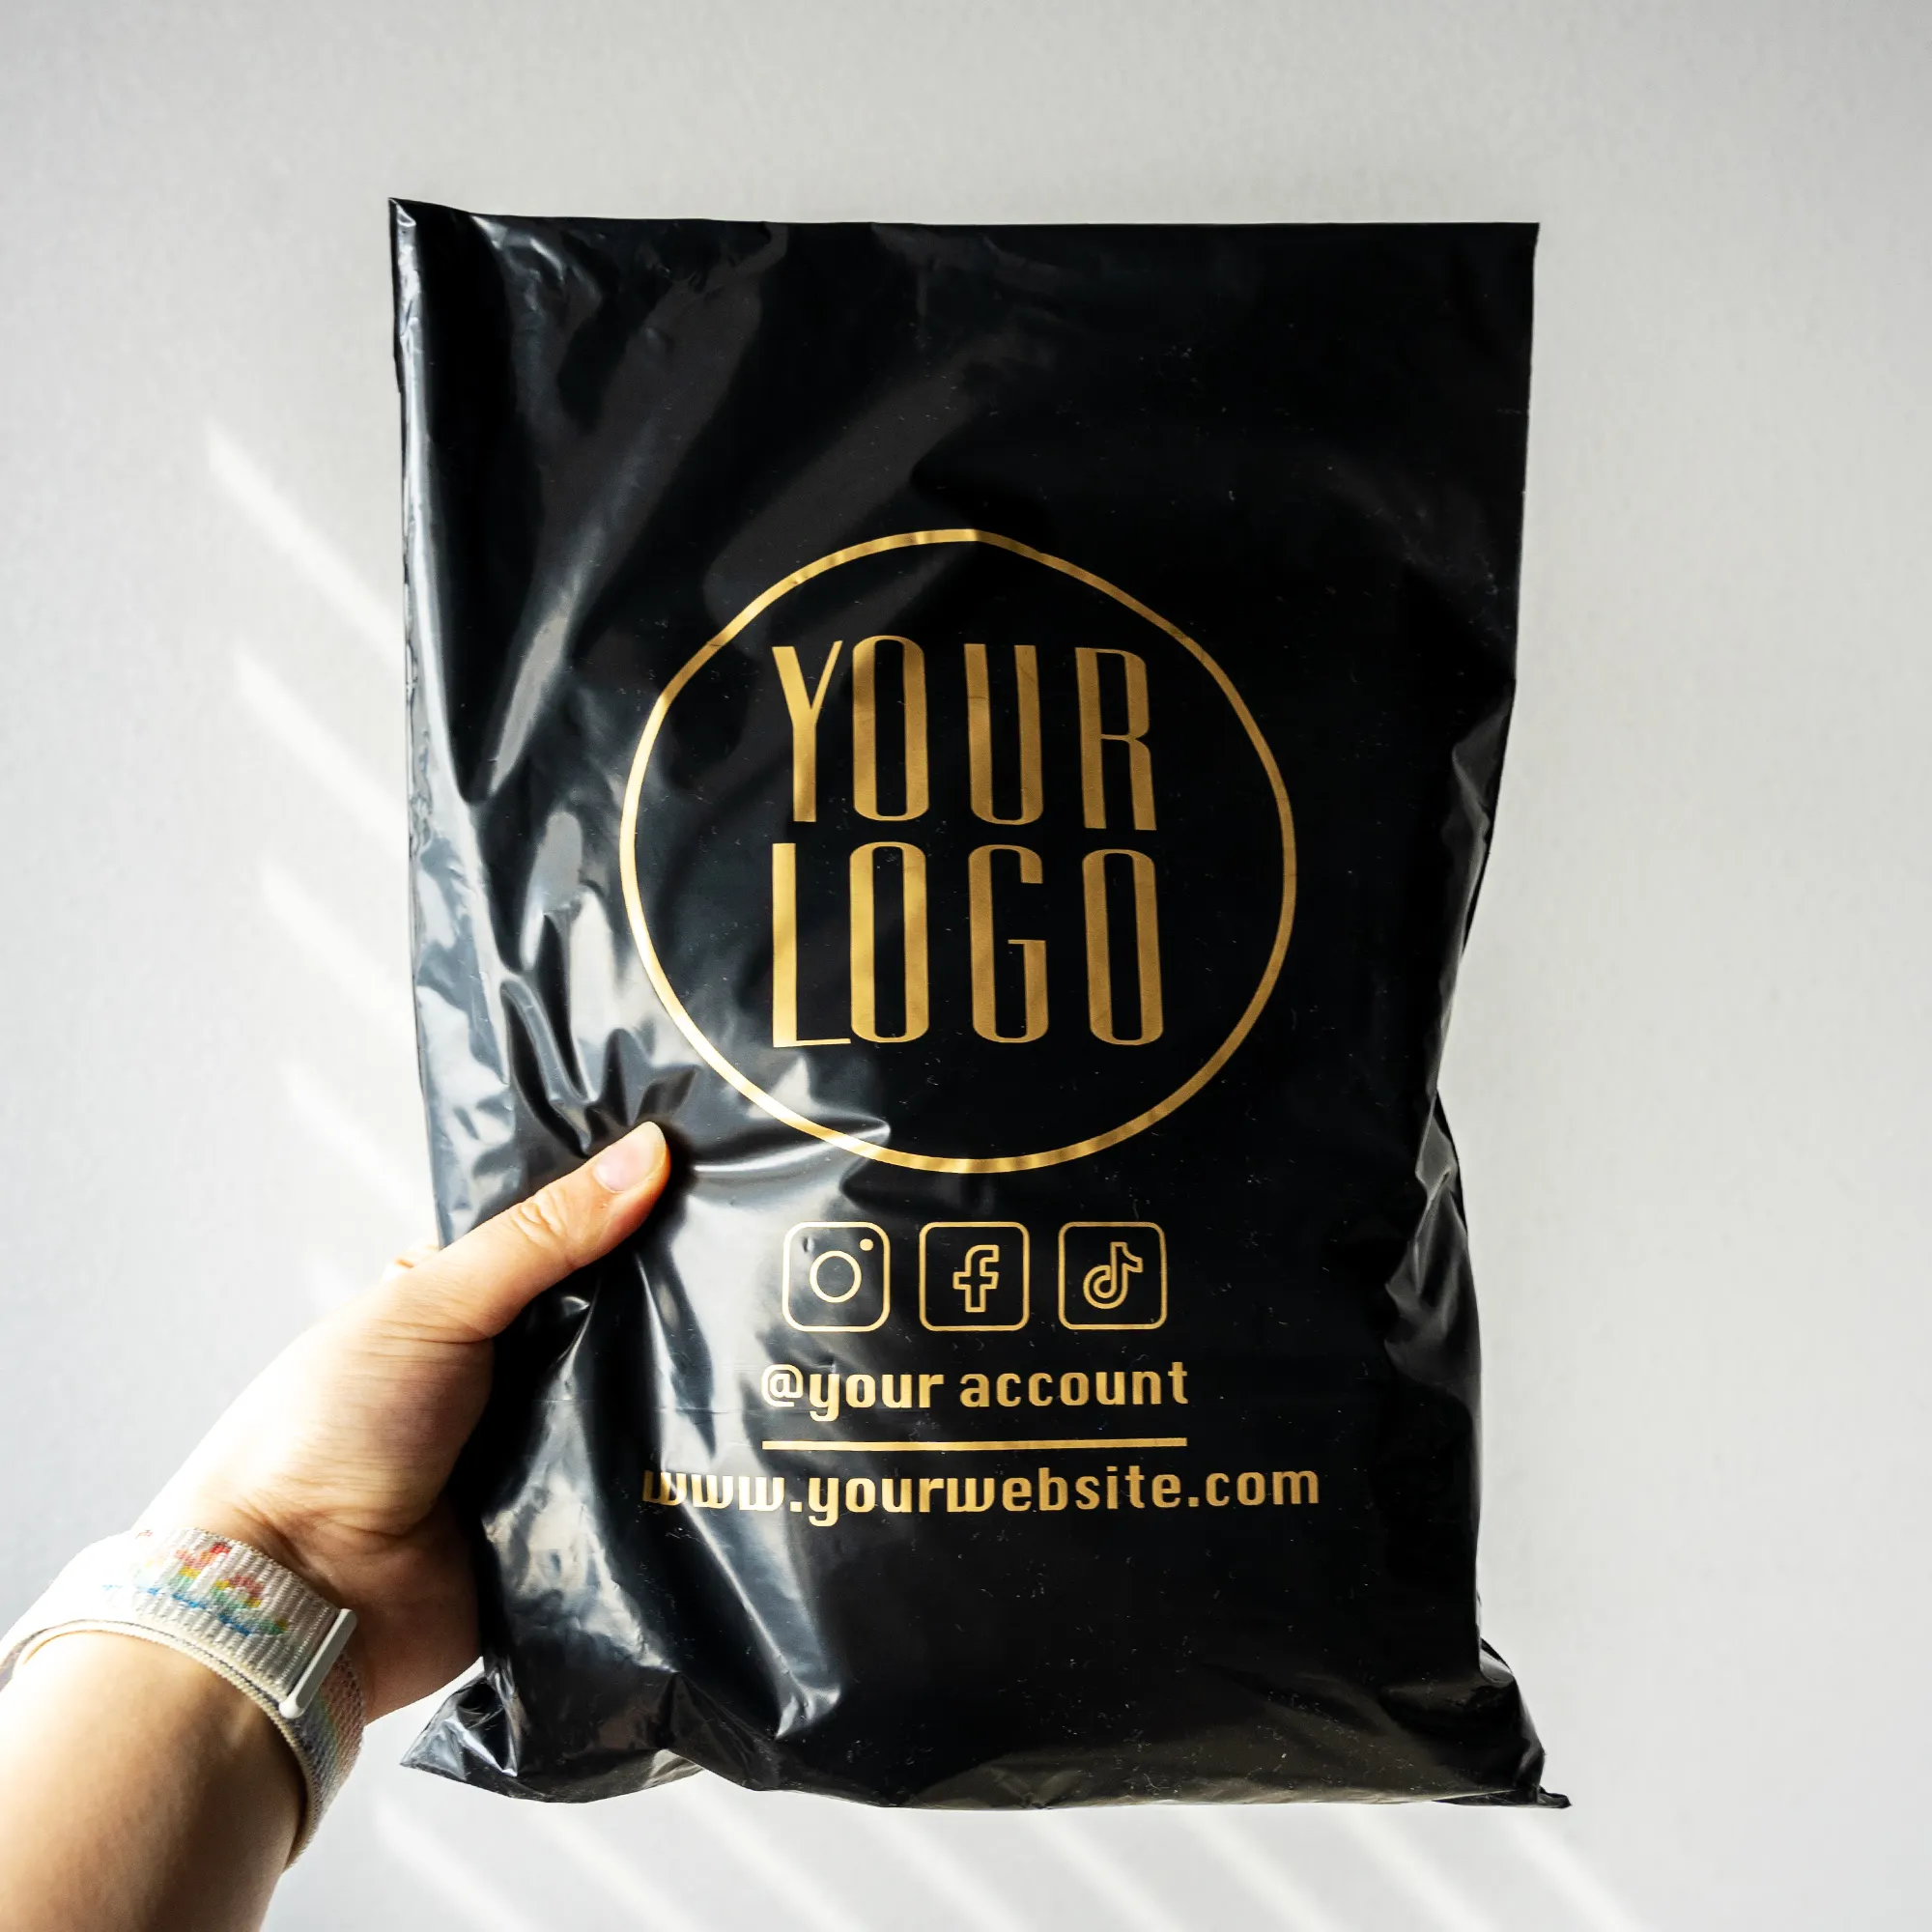 Sacola de plástico com logotipo personalizado, sacola com selo poli, sacola personalizada para entrega, envelope, sacola para envio de roupas